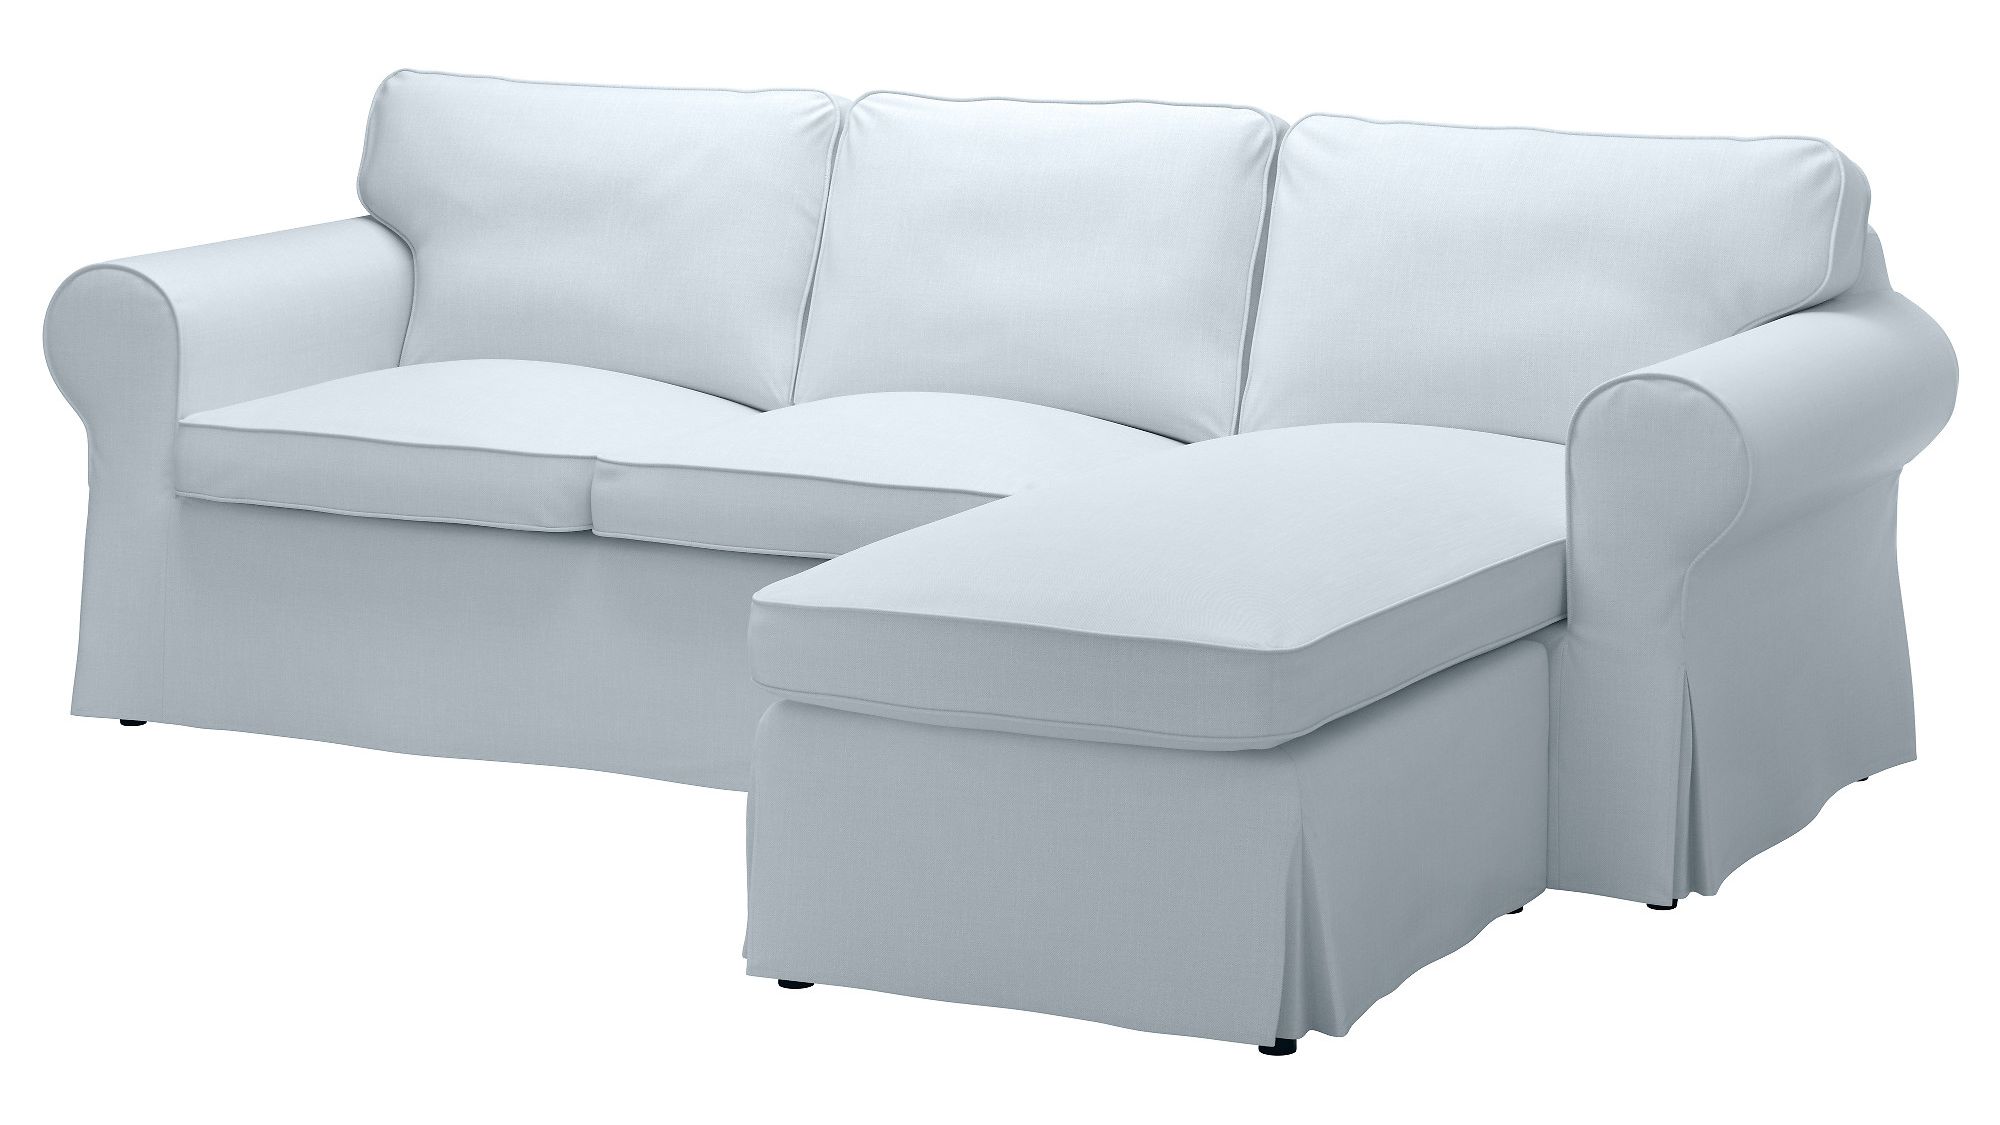 sofa slip covers